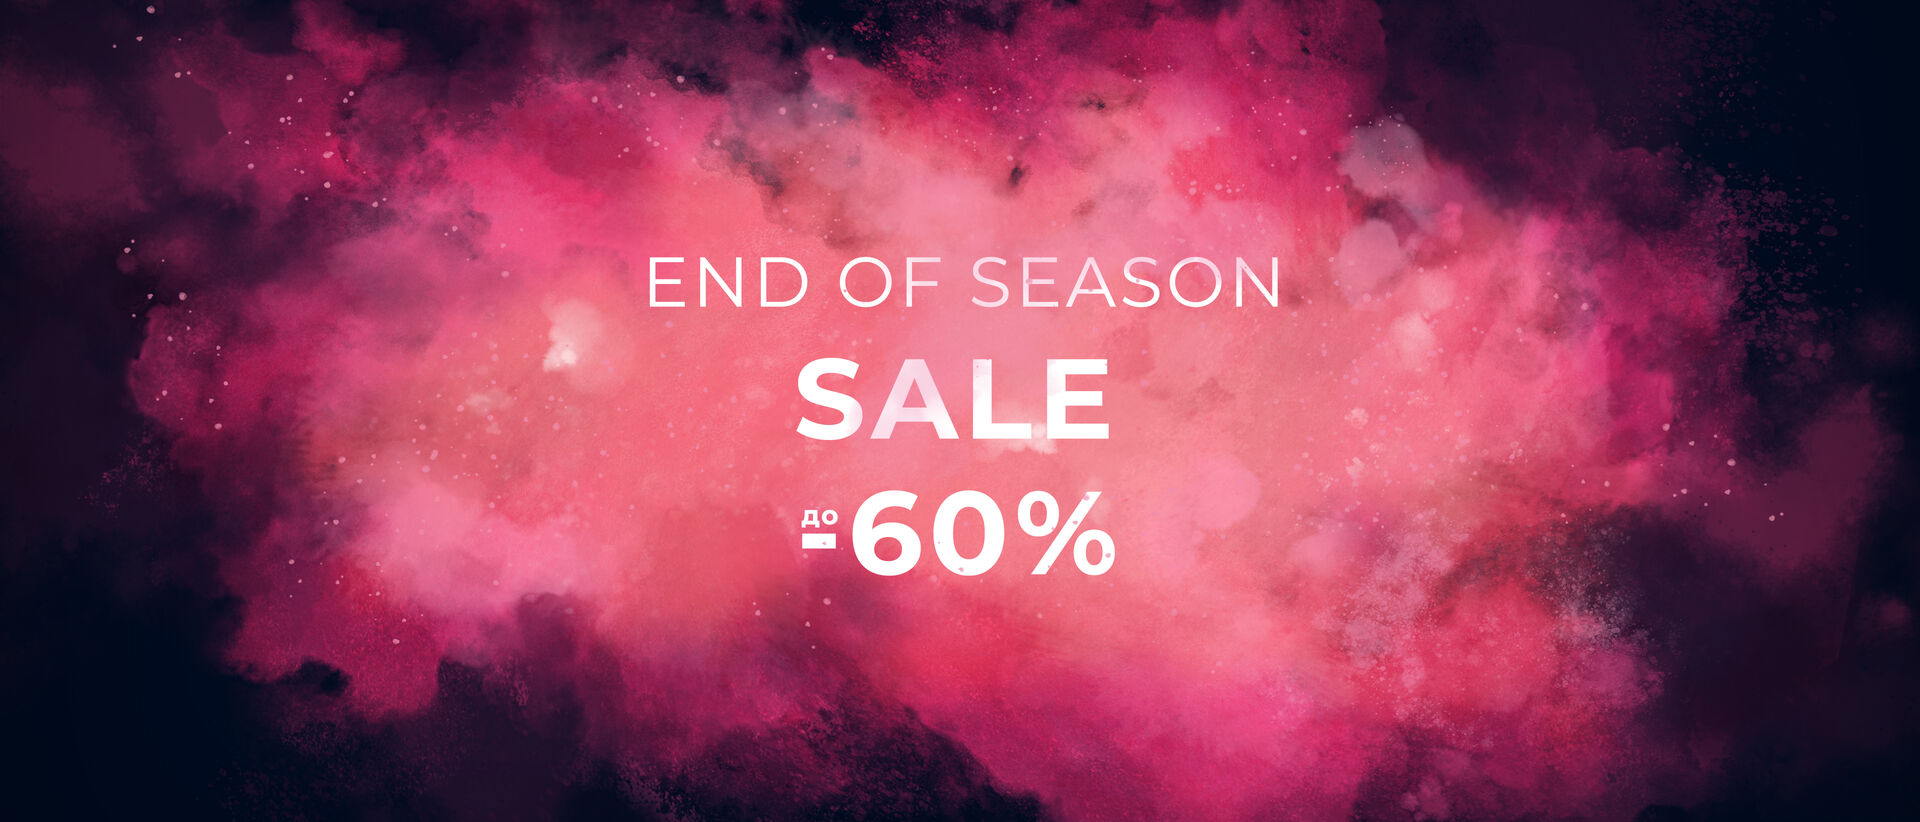 End-of-Season-Sale-BGG